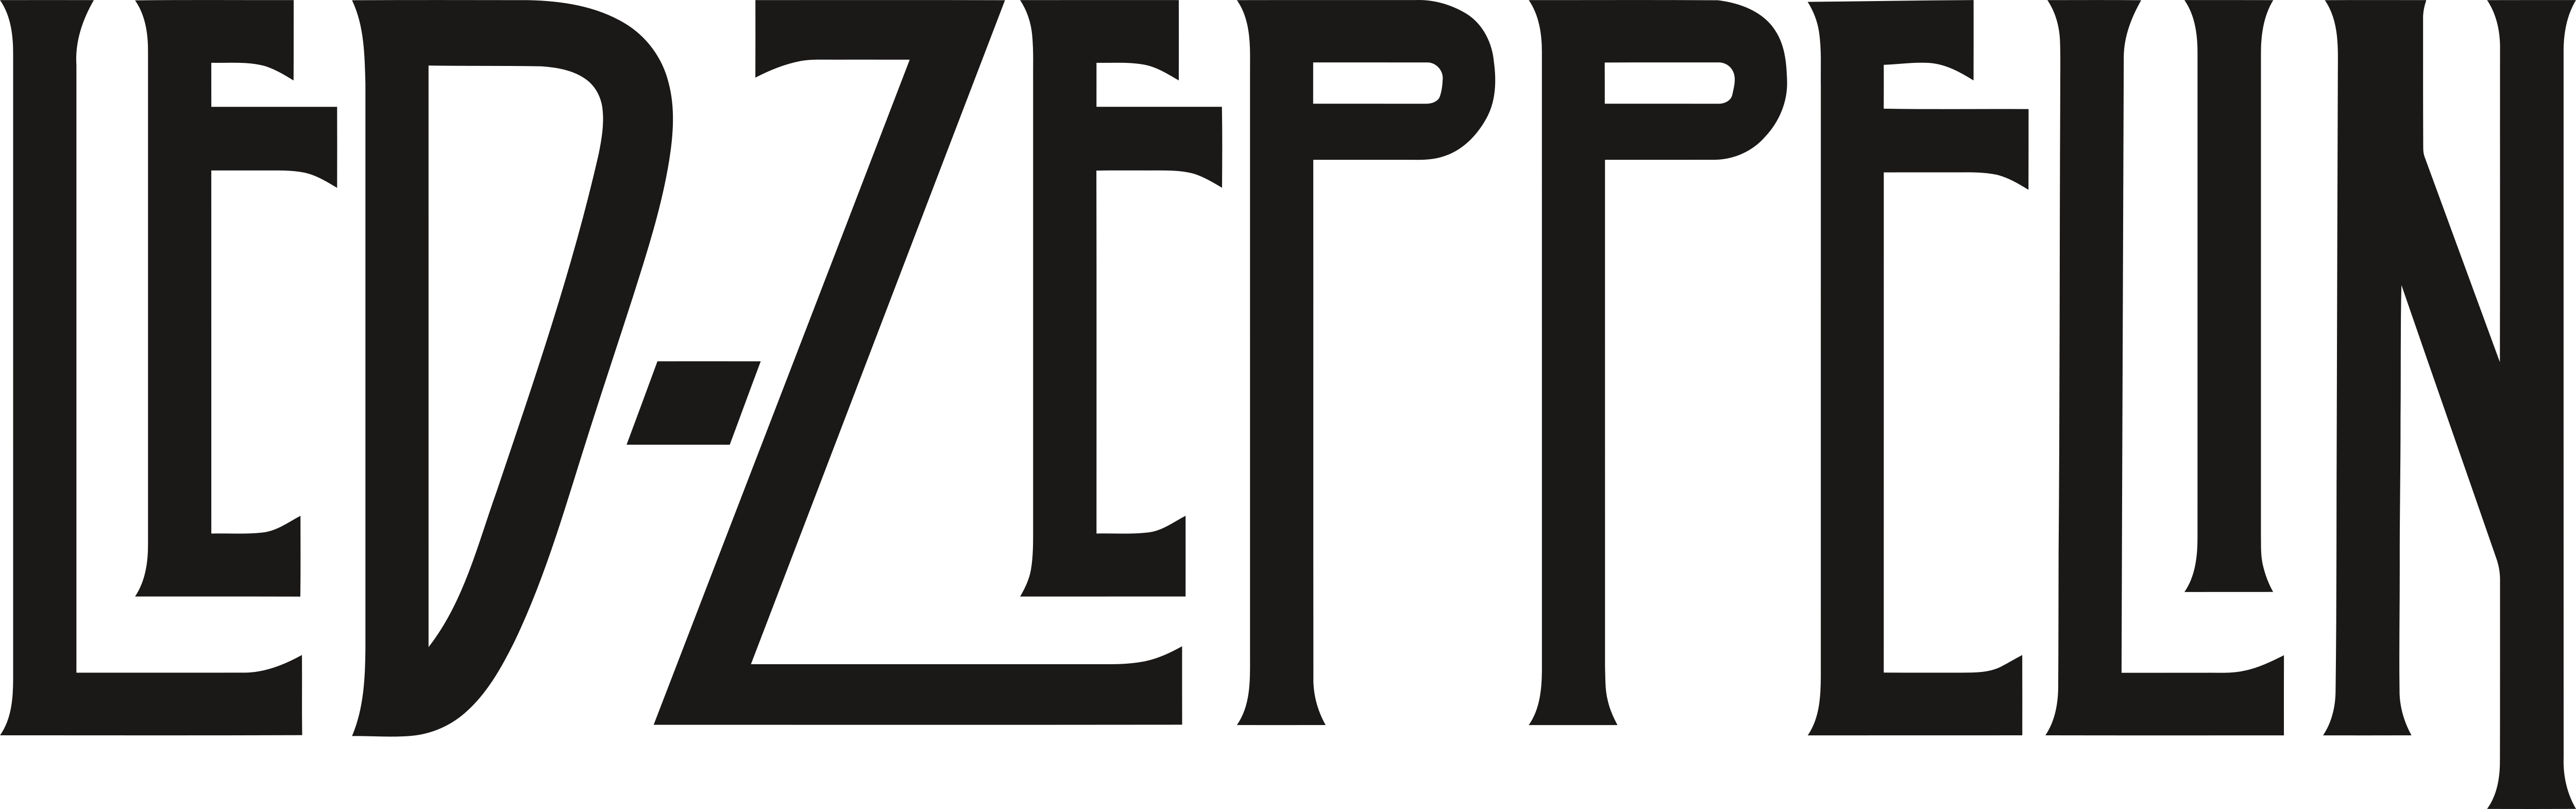 led zeppelin logo font